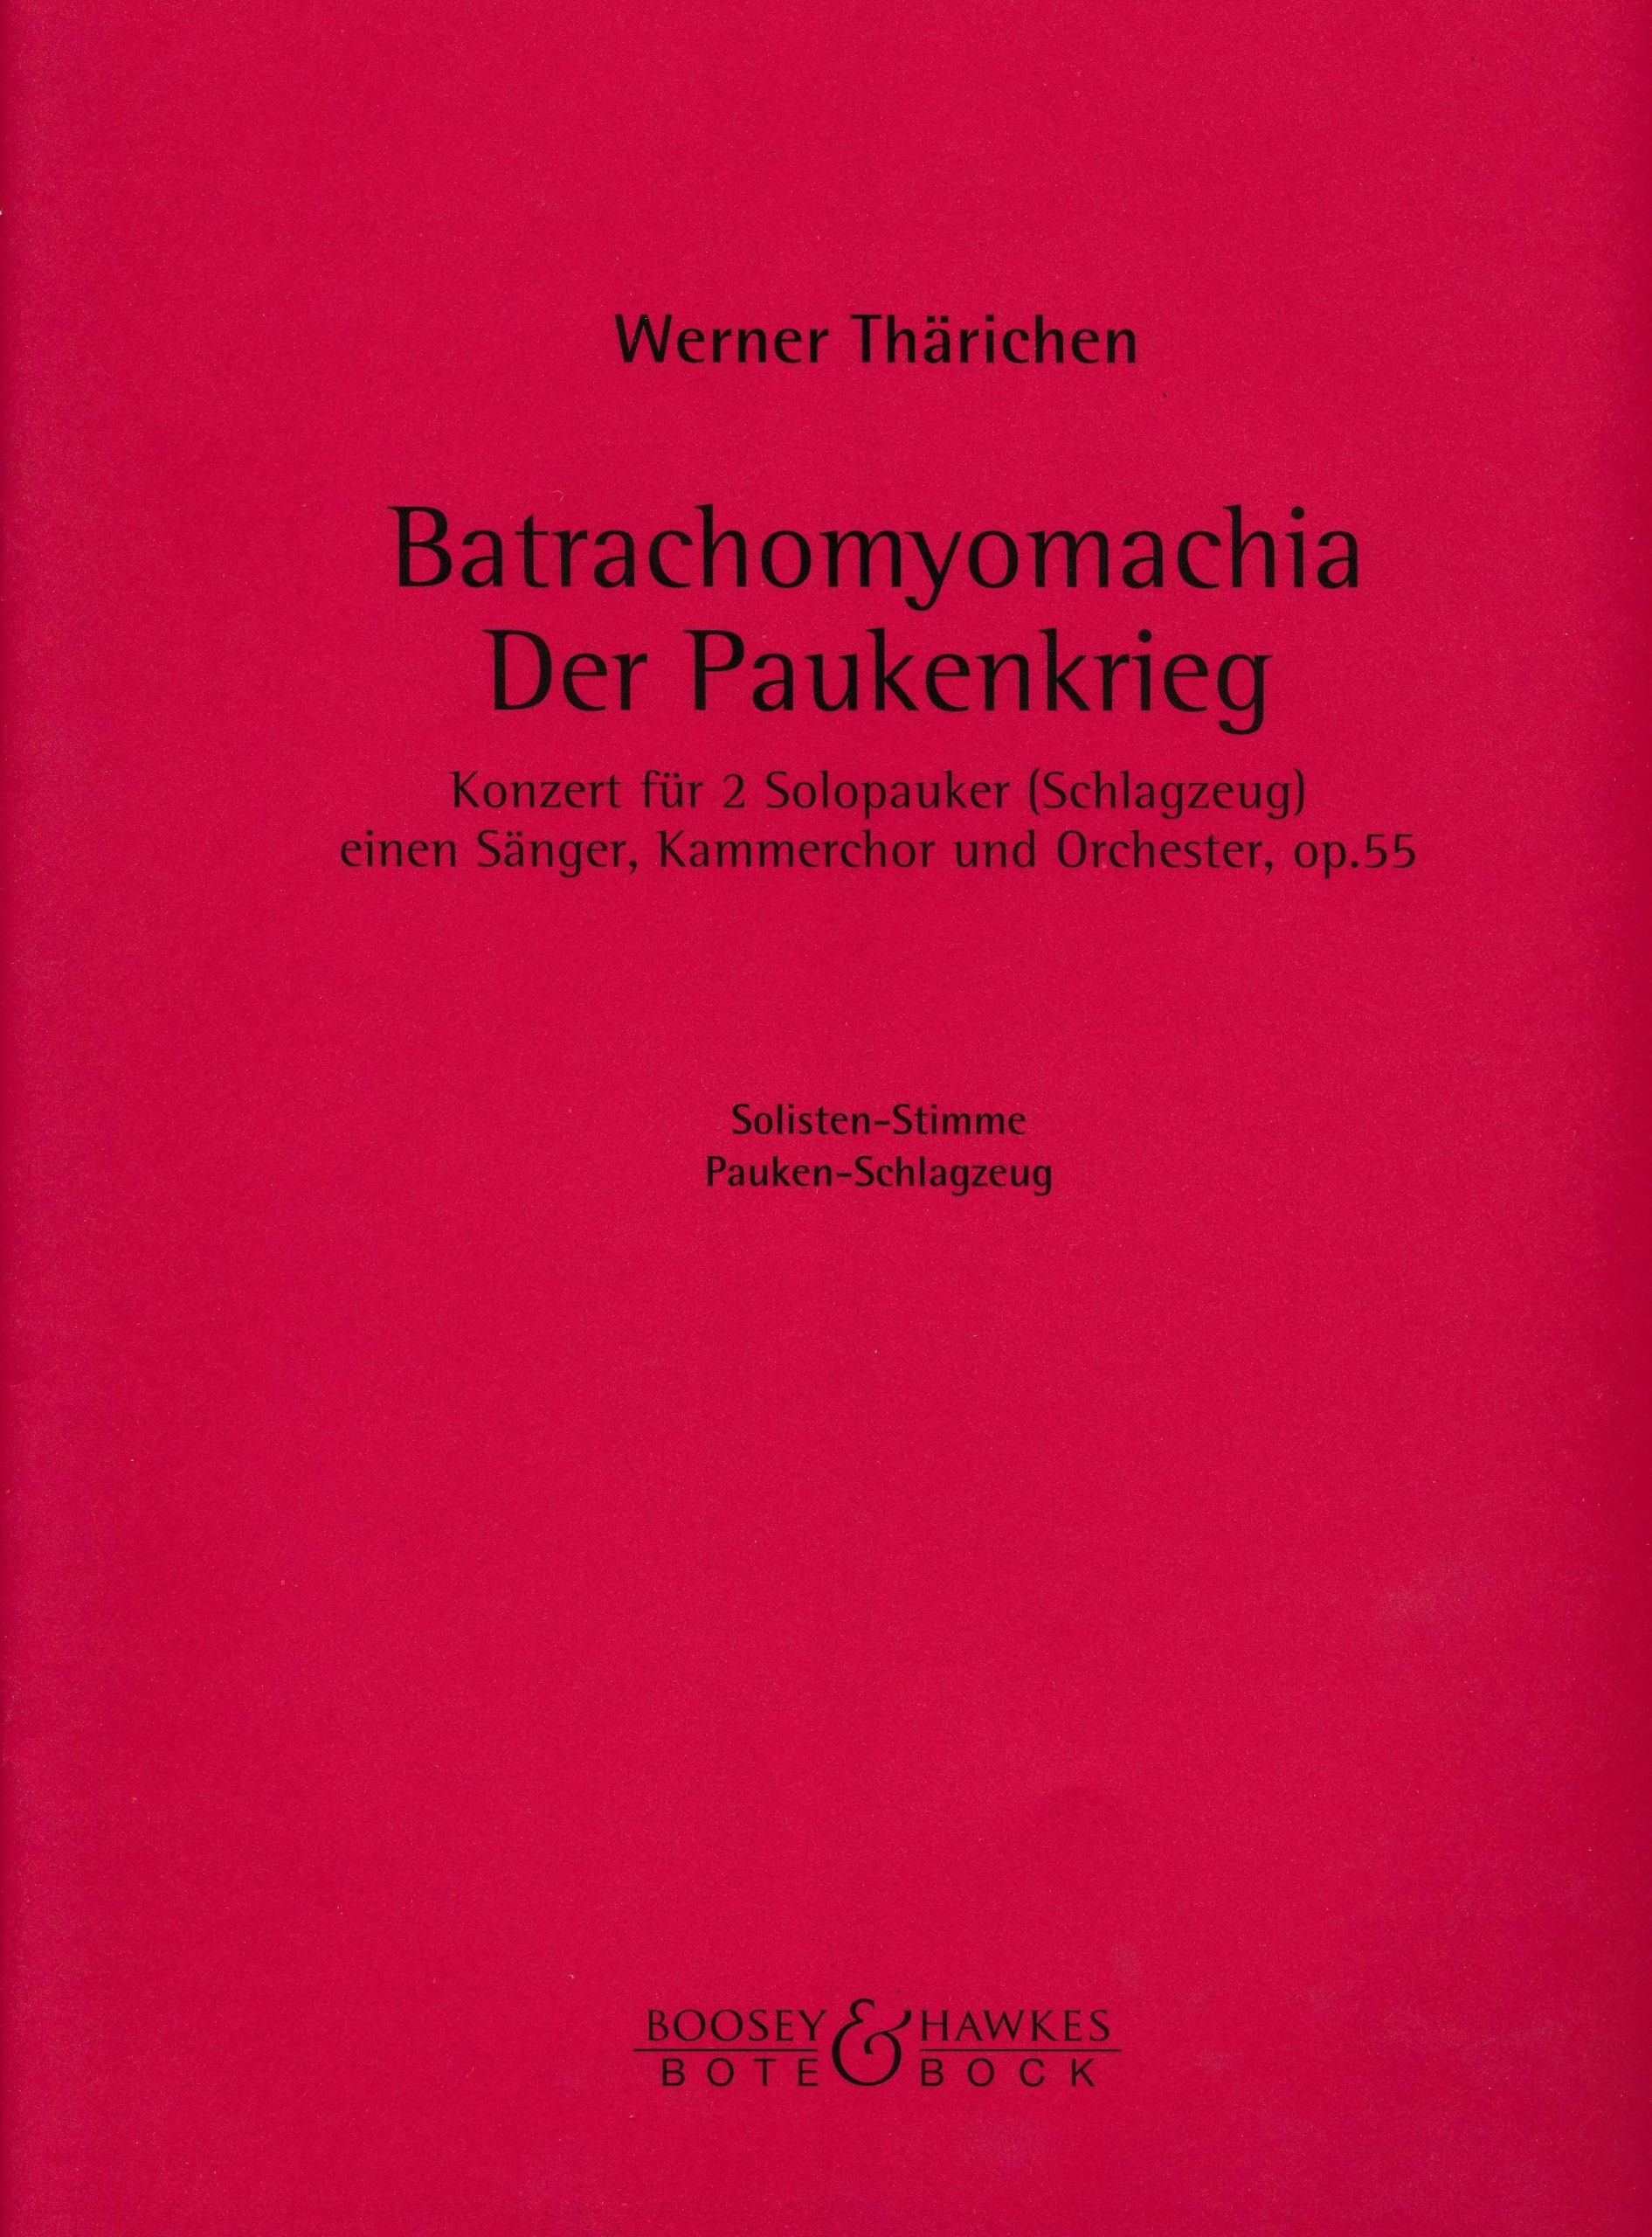 Der Paukenkrieg (Batrachomuomachia) op. 55